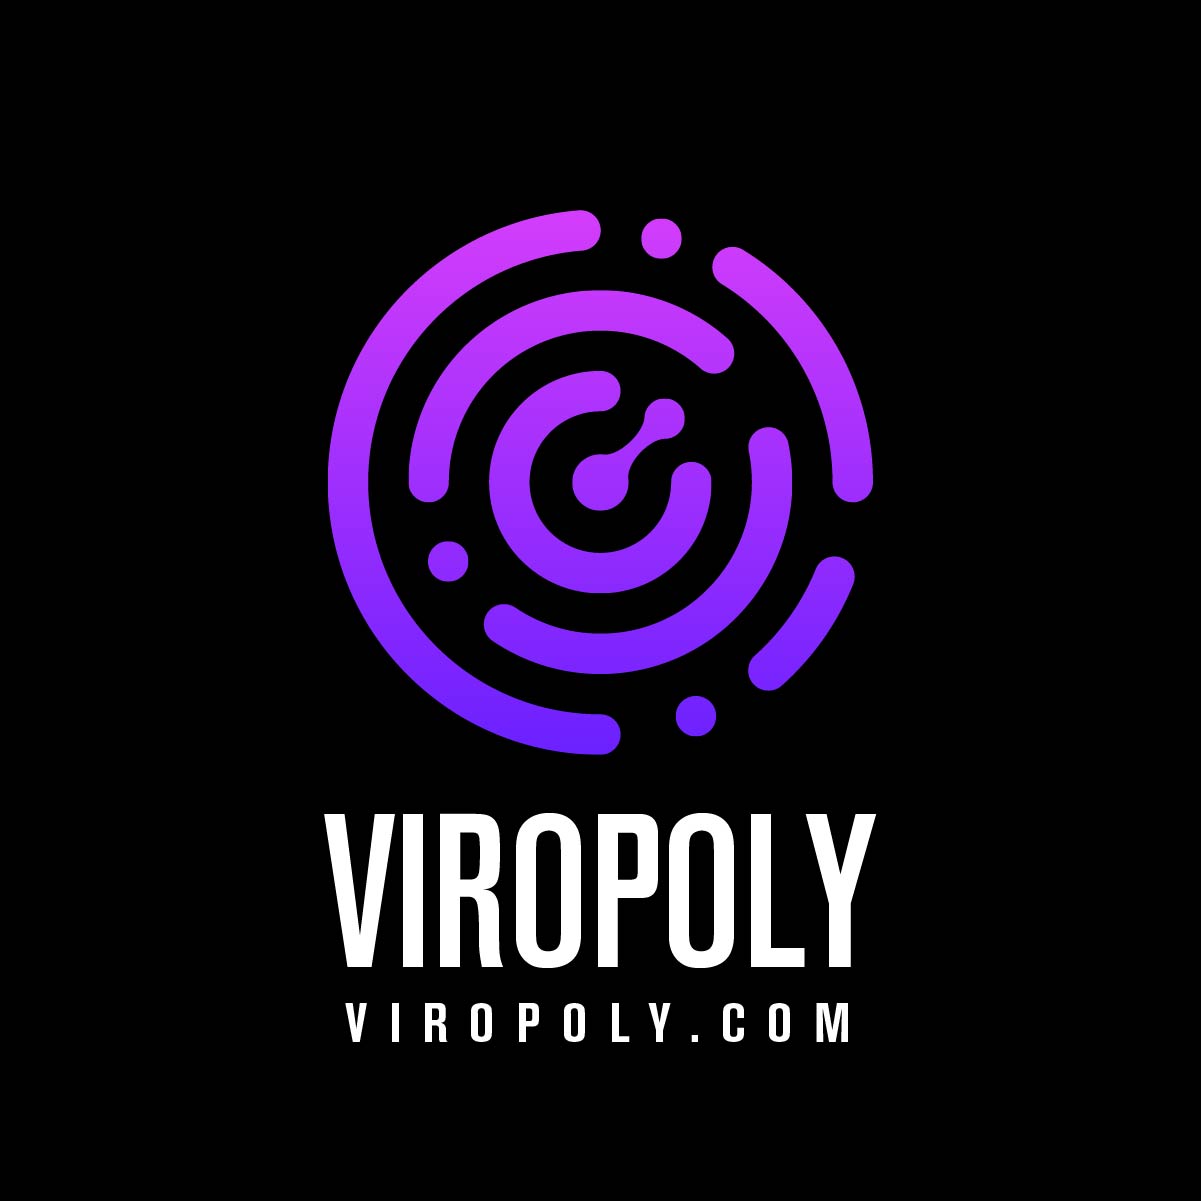 Viropoly Brand Name Design - by Brandizle